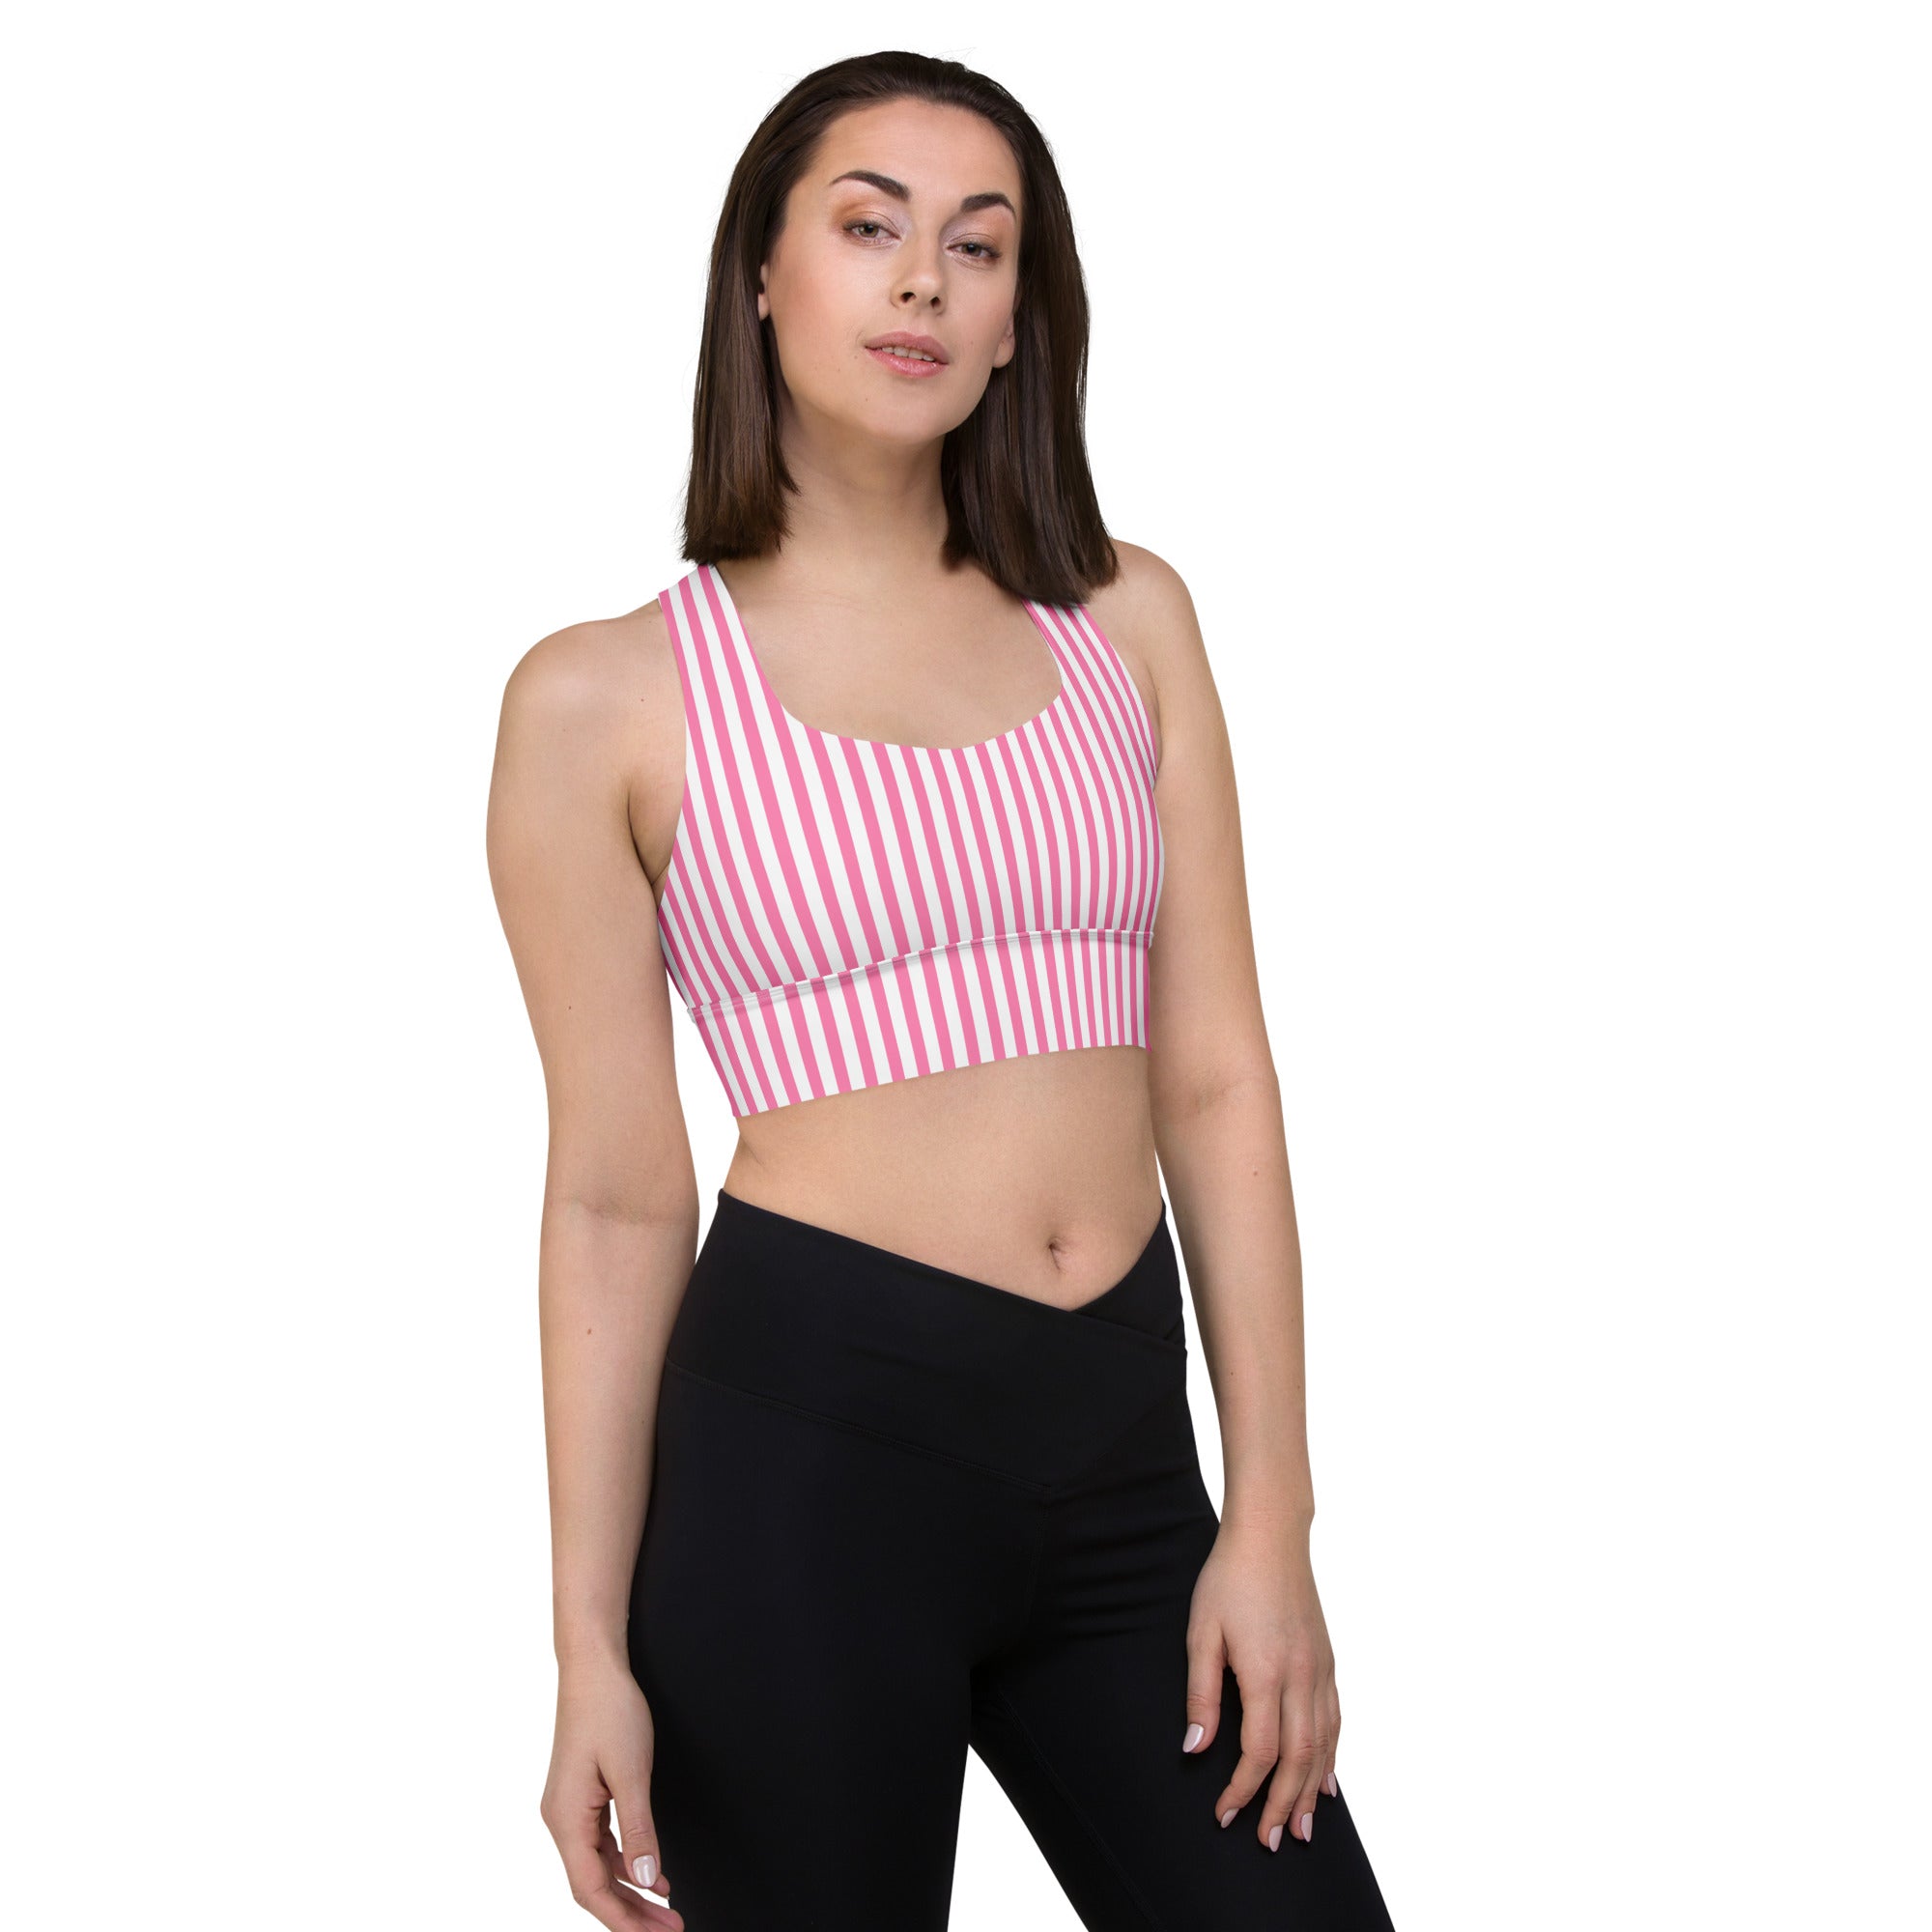 Longline sports bra- White and Pink Stripes